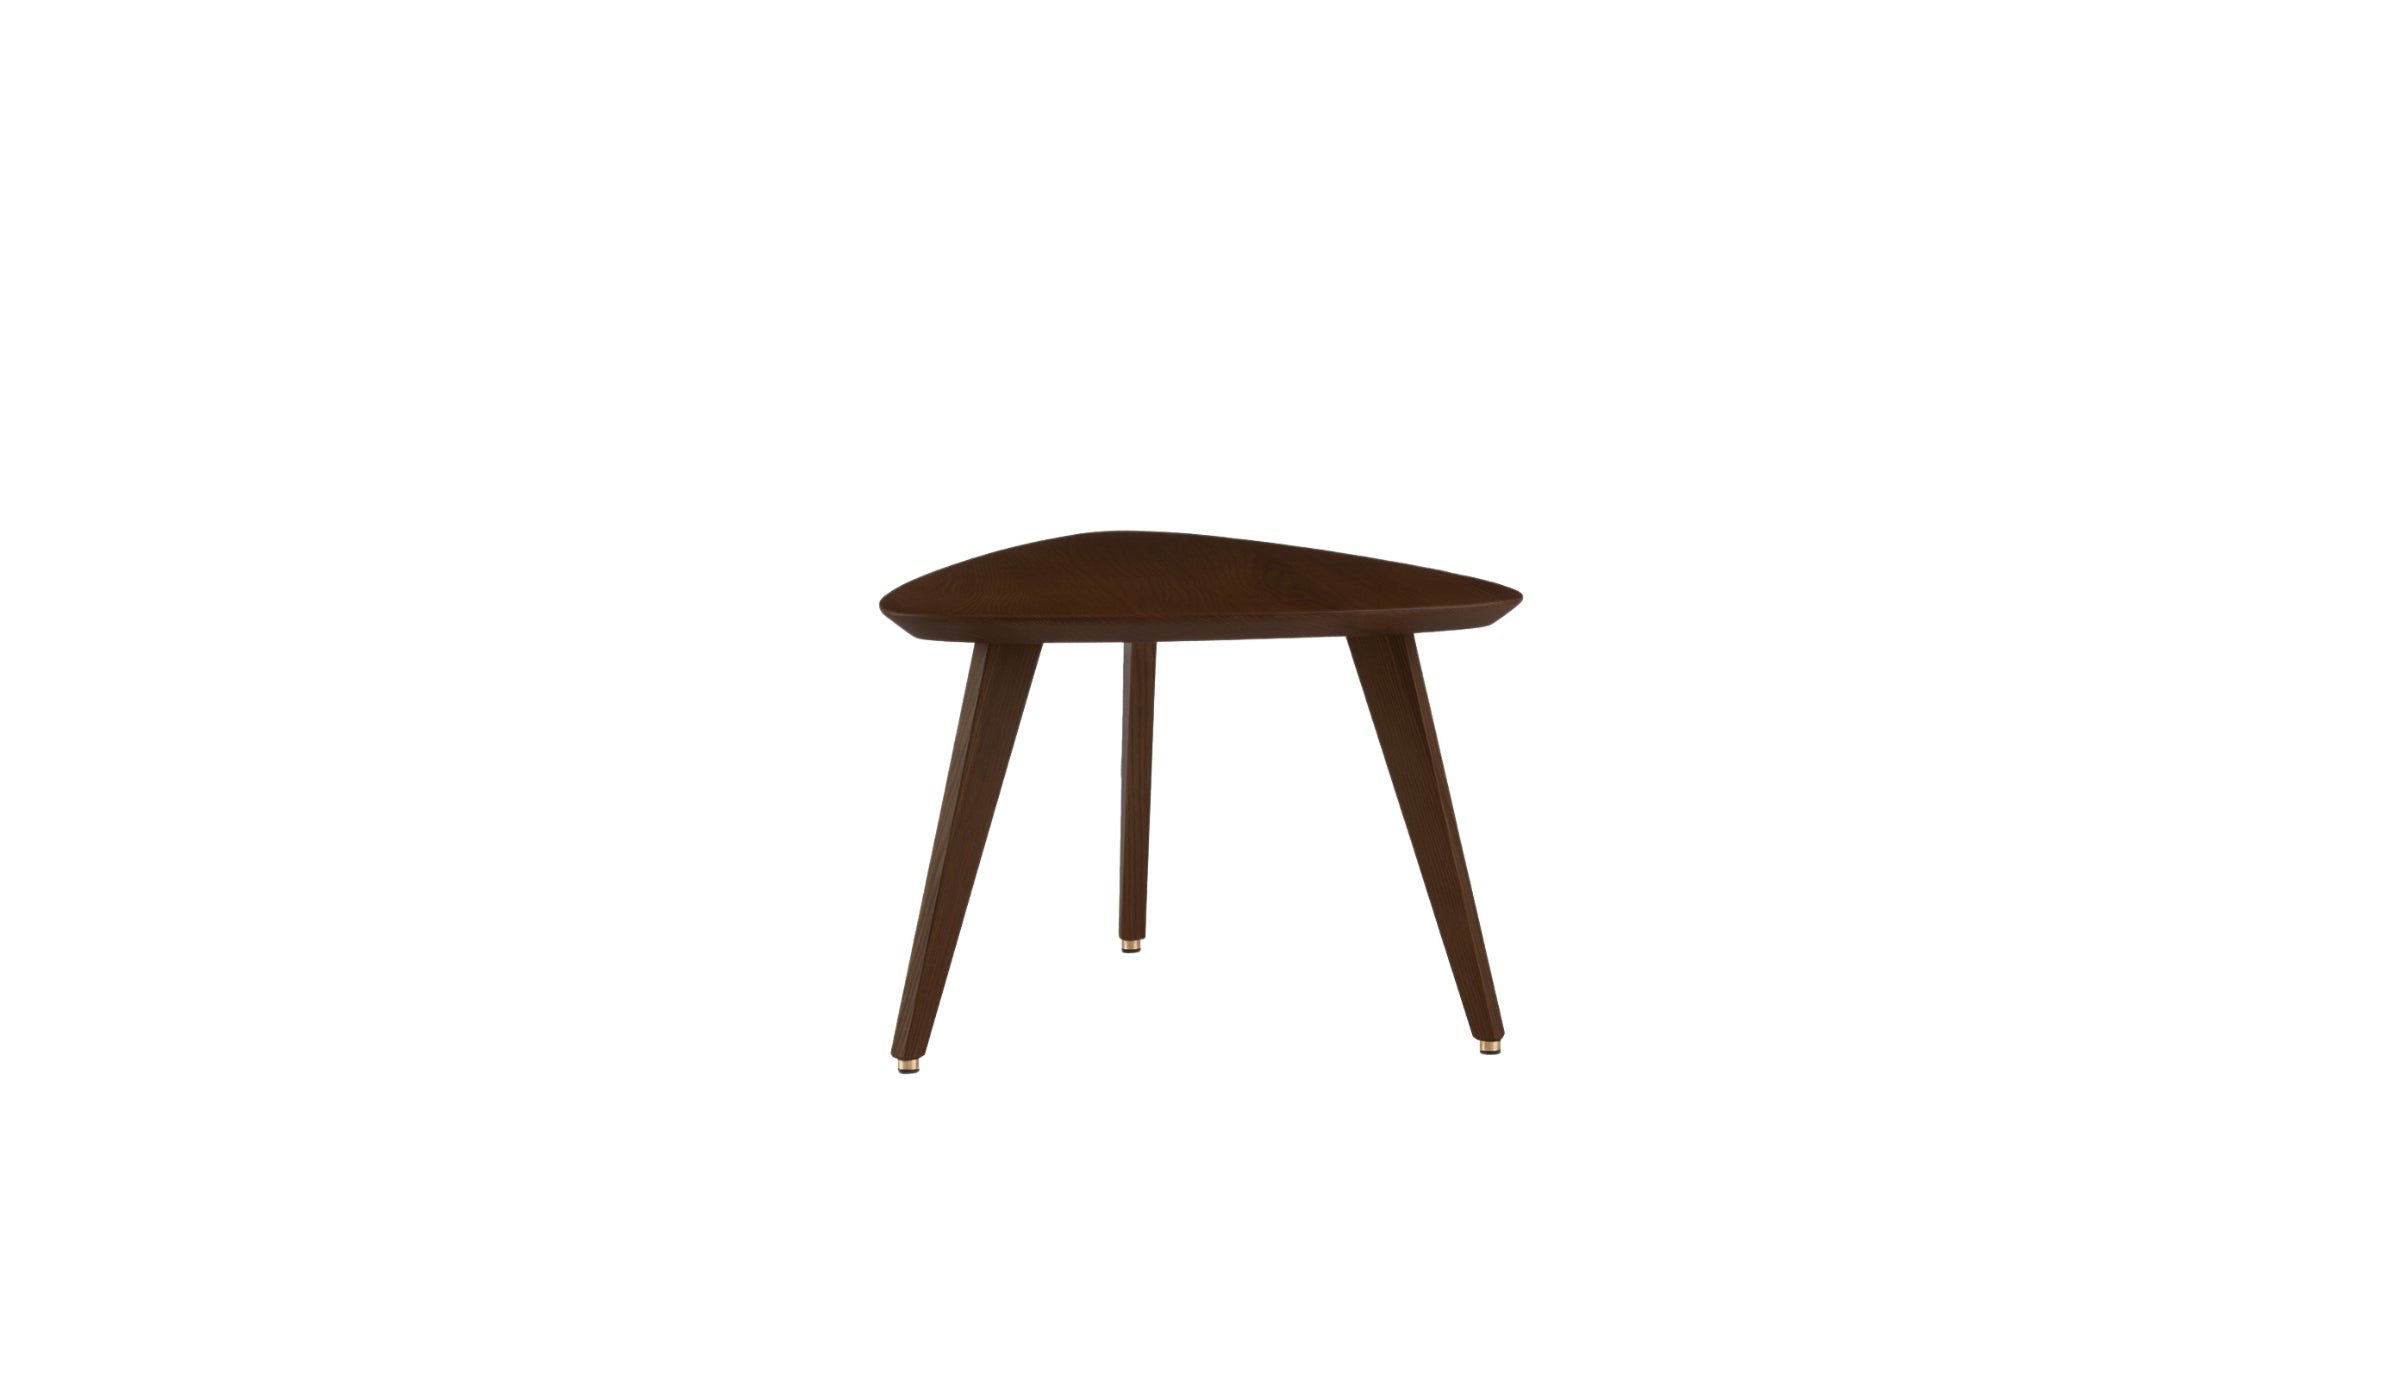 Table basse-366 - Table basse, S, chêne brun--NOVINEA-366 CONCEPT